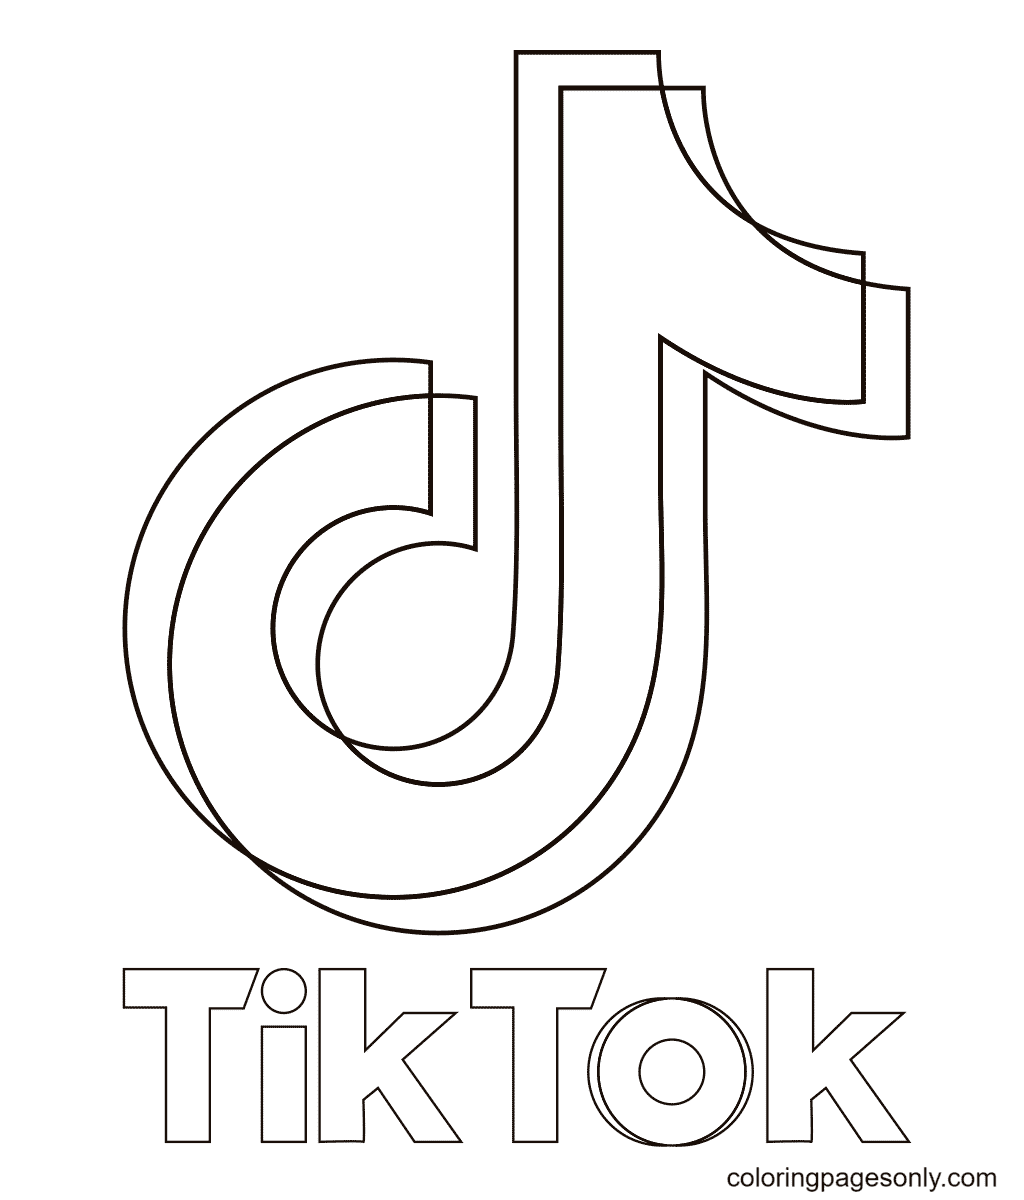 TikTok Tik Tok Logo Coloring Page - Free Printable Coloring Pages